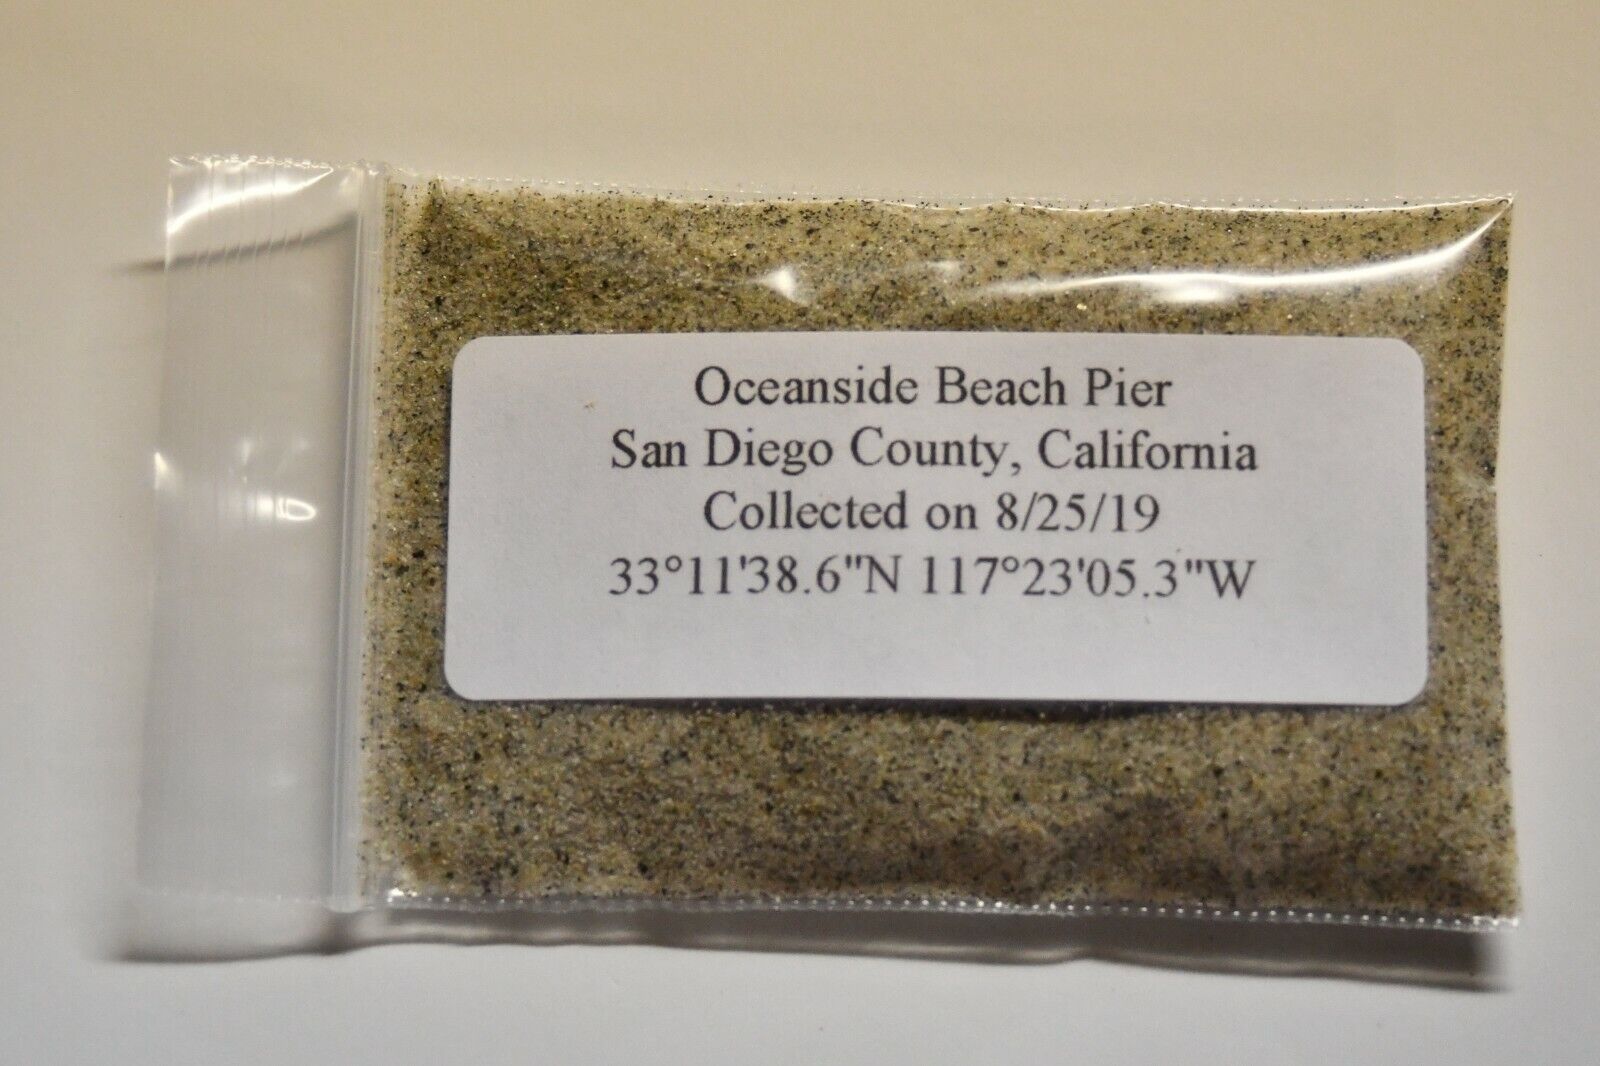 Oceanside Beach Pier Sand Soil Dirt Sample in San Diego California Apx. 30ml.